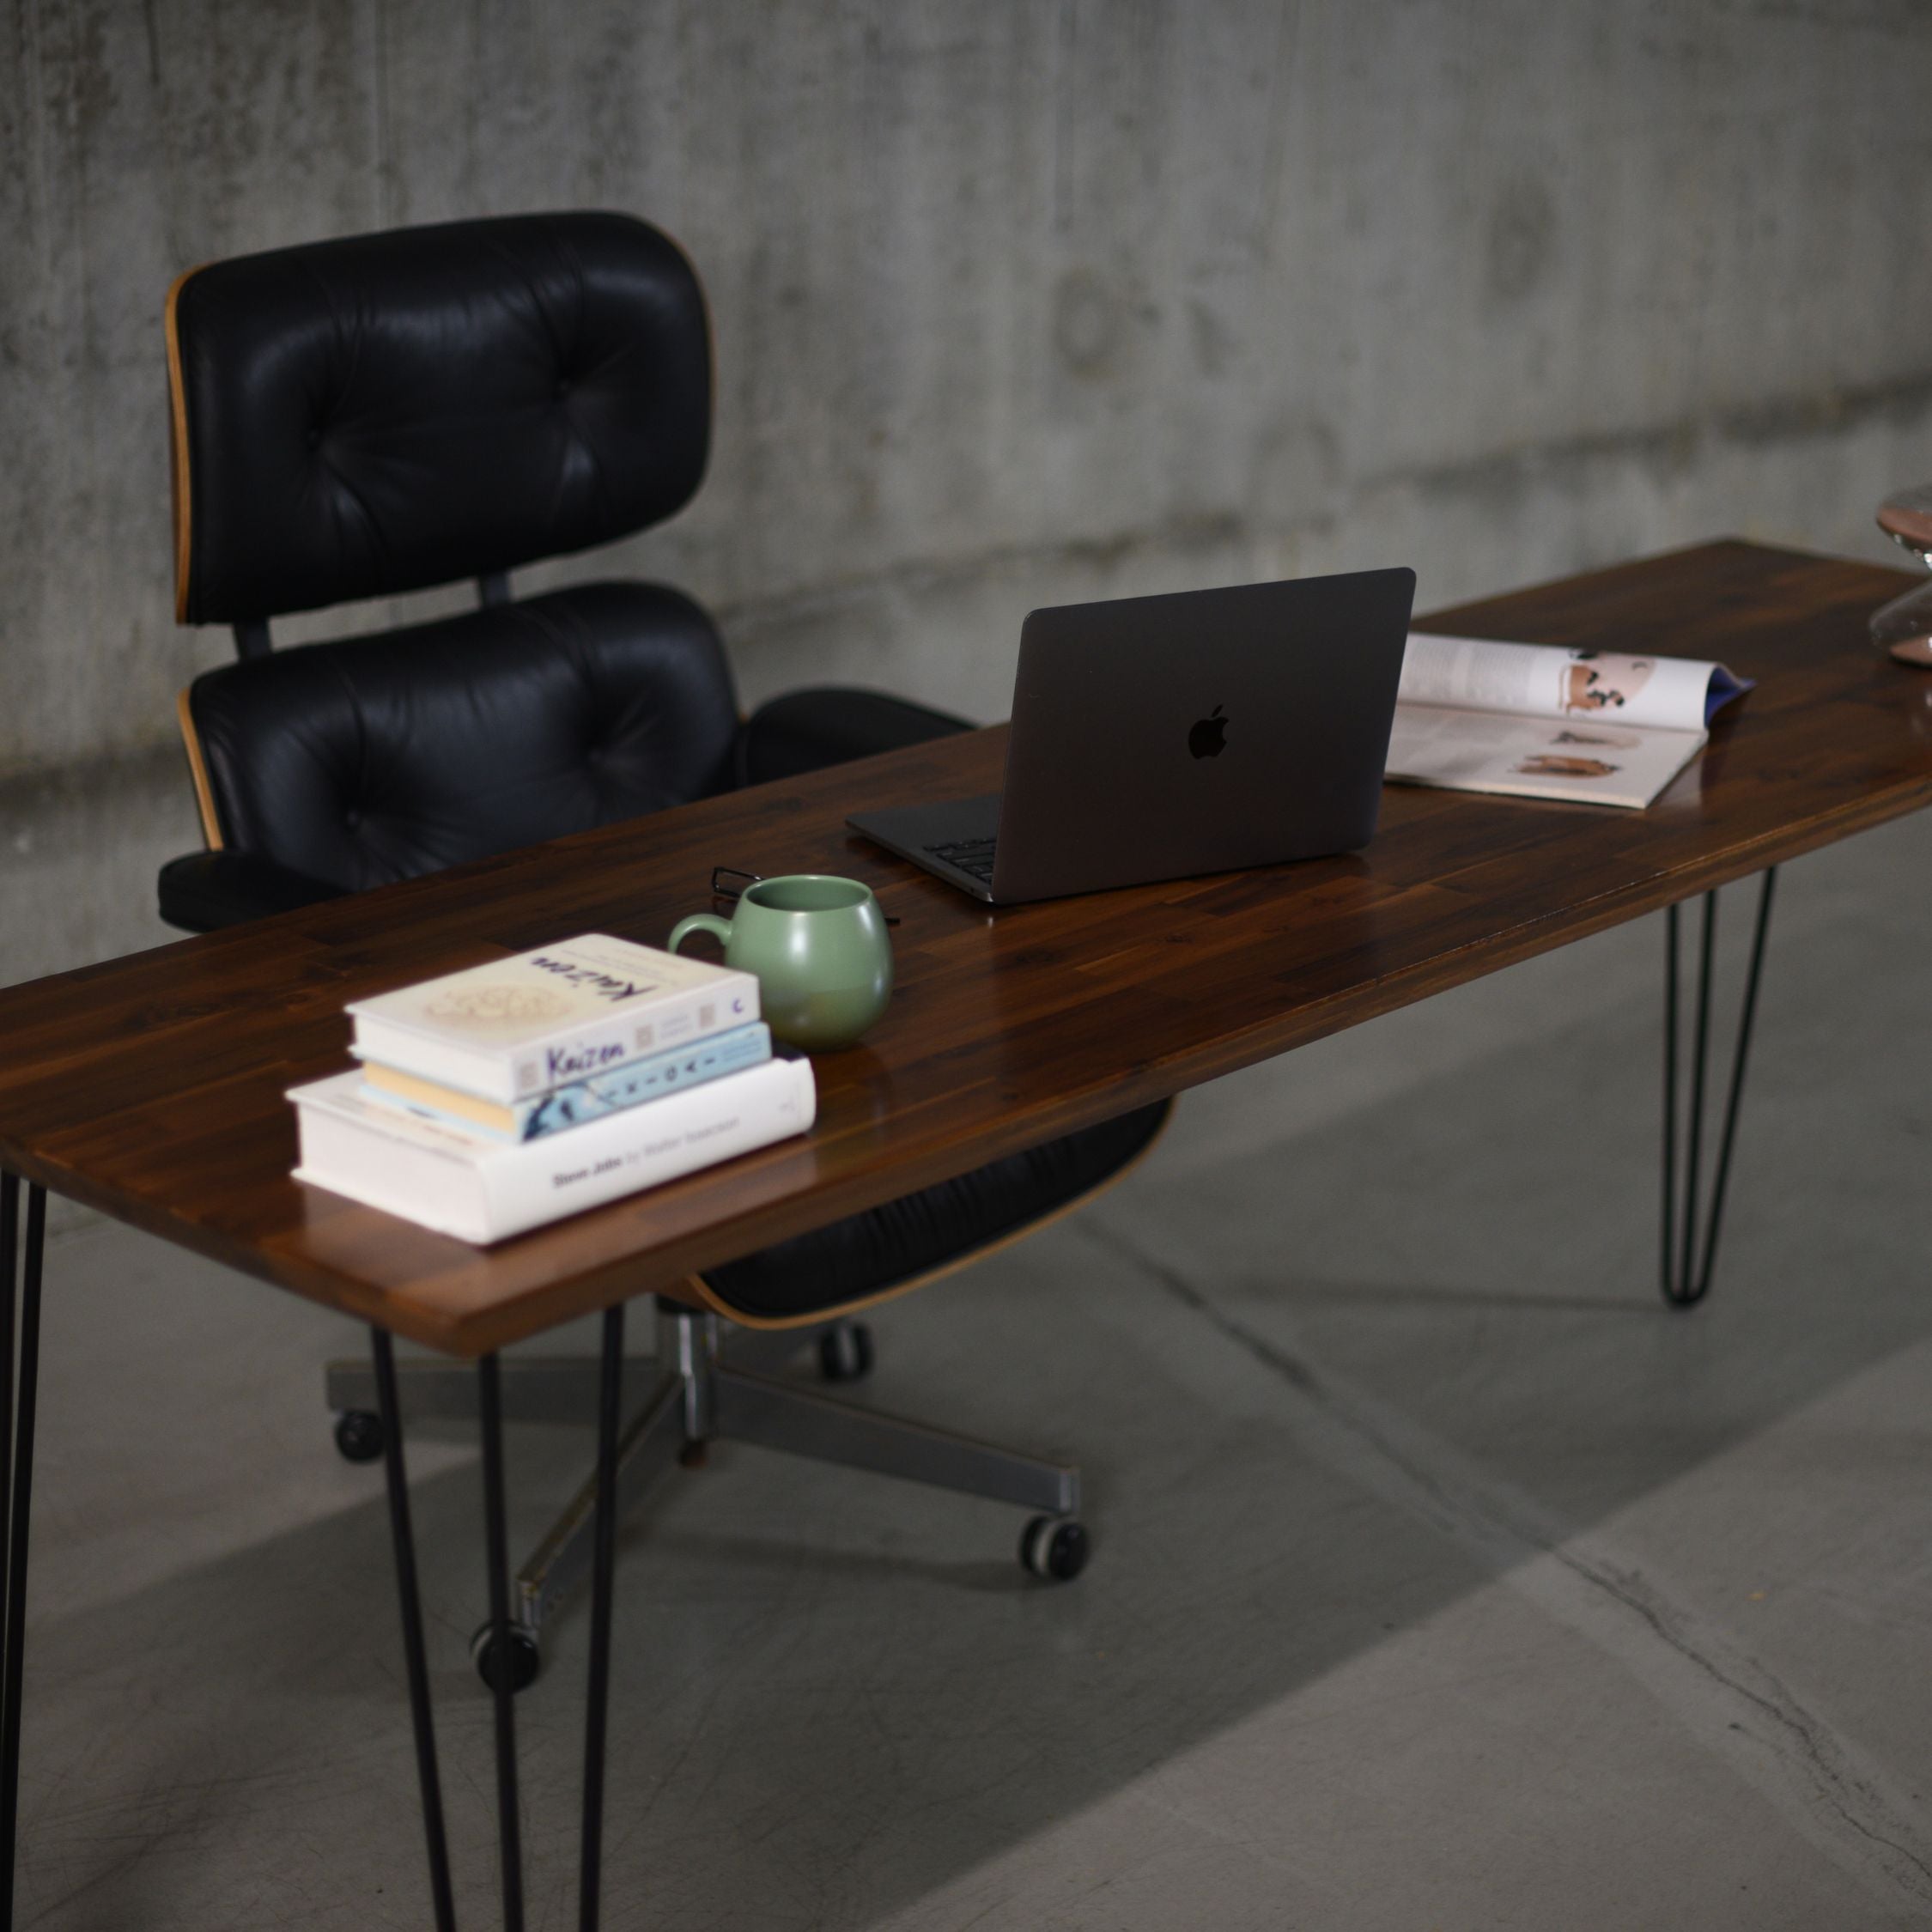 Bloom Extra Long Desk 2.0  2-Person Desk. Minimalist & Industrial